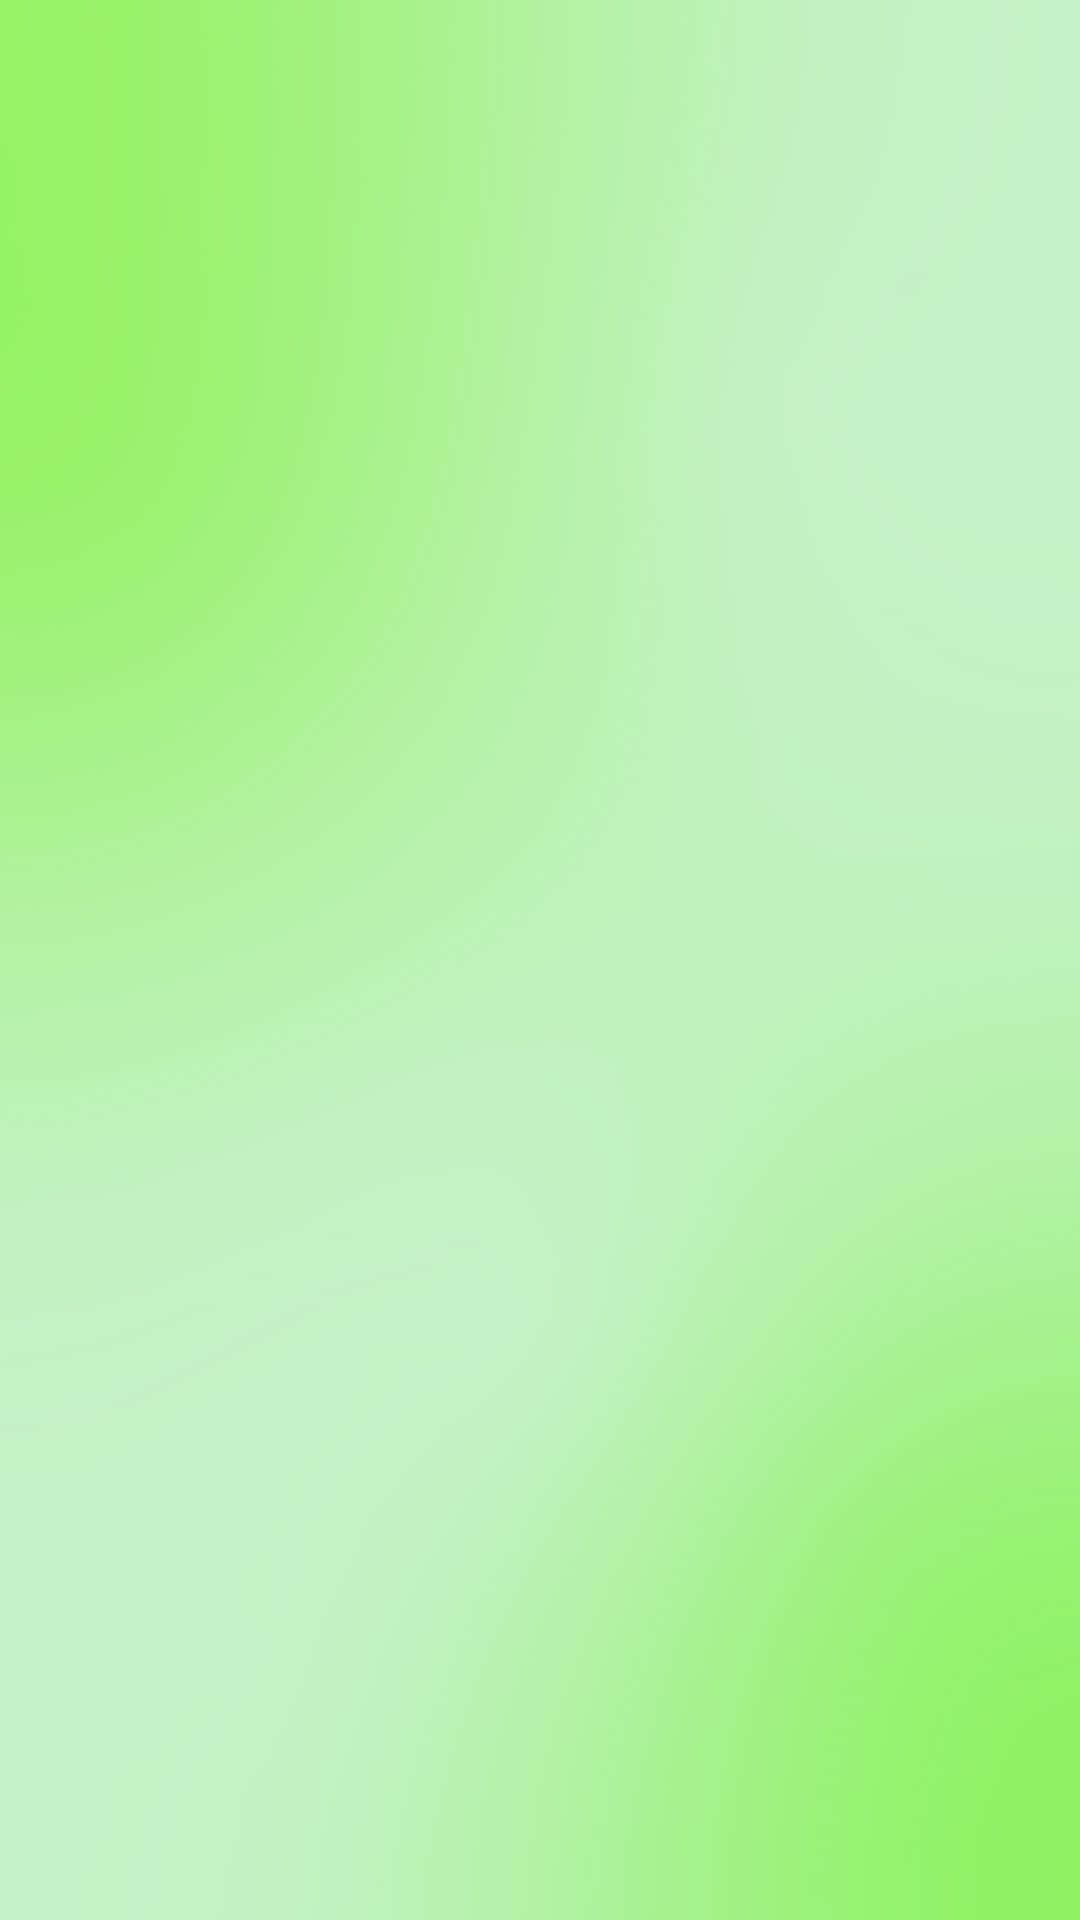 Bright, lush green gradient background